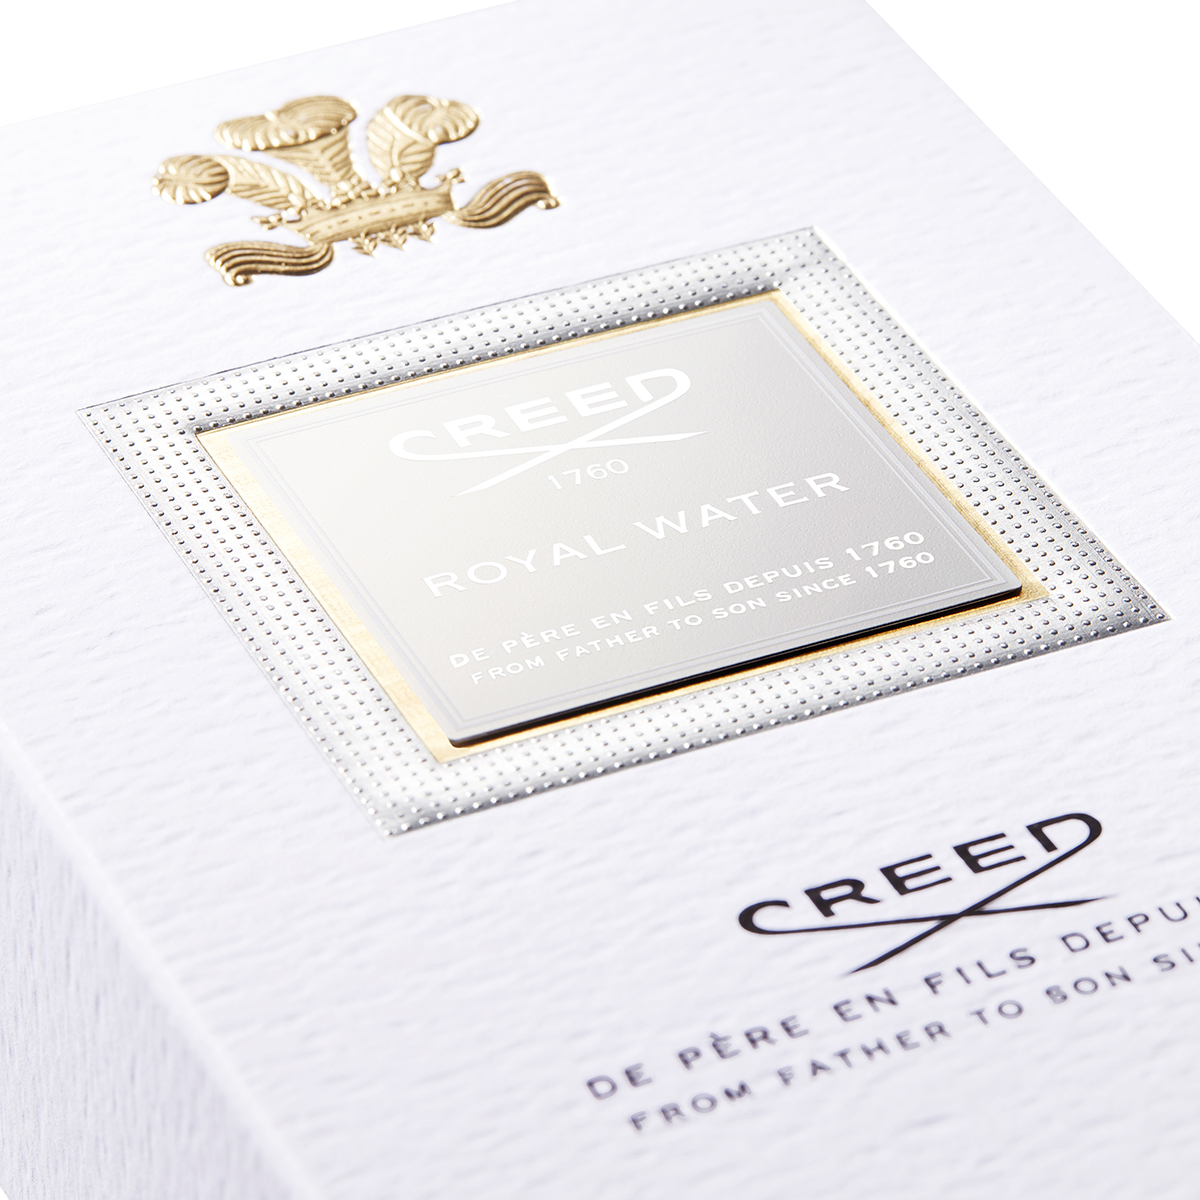 Creed - Royal Water Eau de Parfum